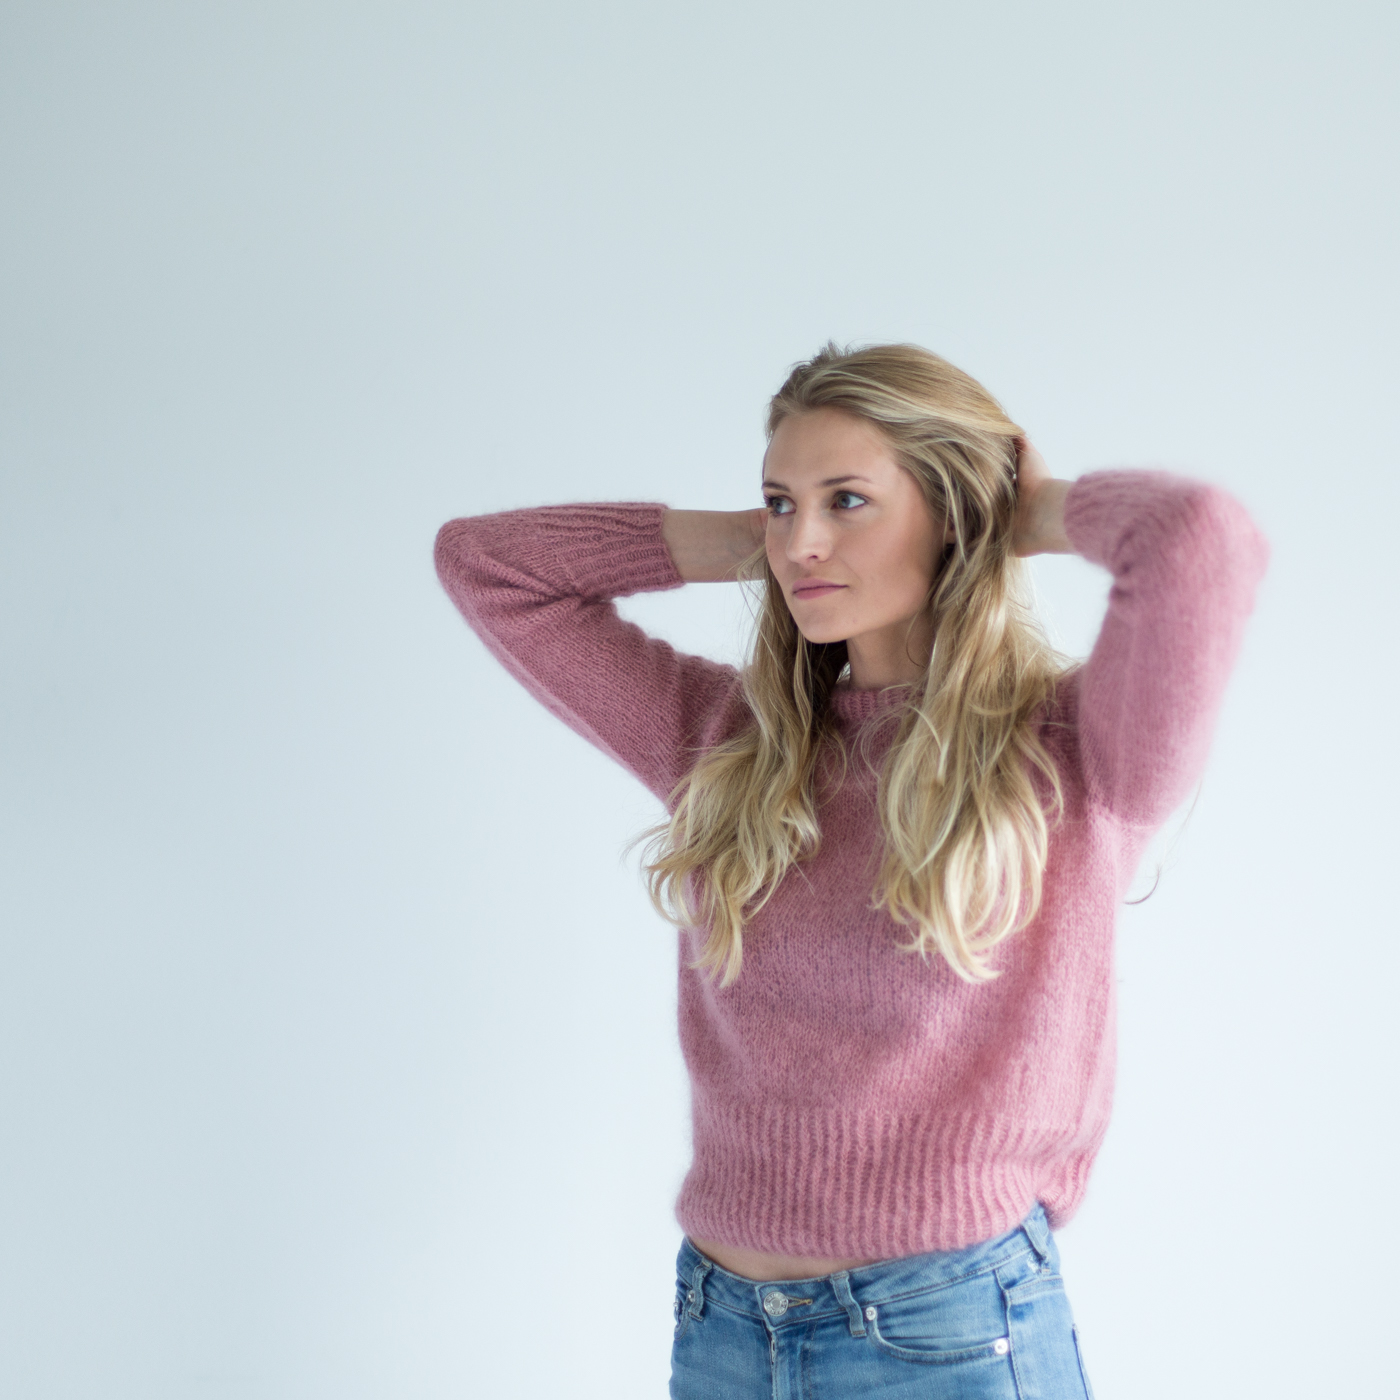 strikkeoppskrift enkel genser dame raglanfelling - Eben Sweater | Basic sweater women knitting kit - by HipKnitShop - 29/06/2018